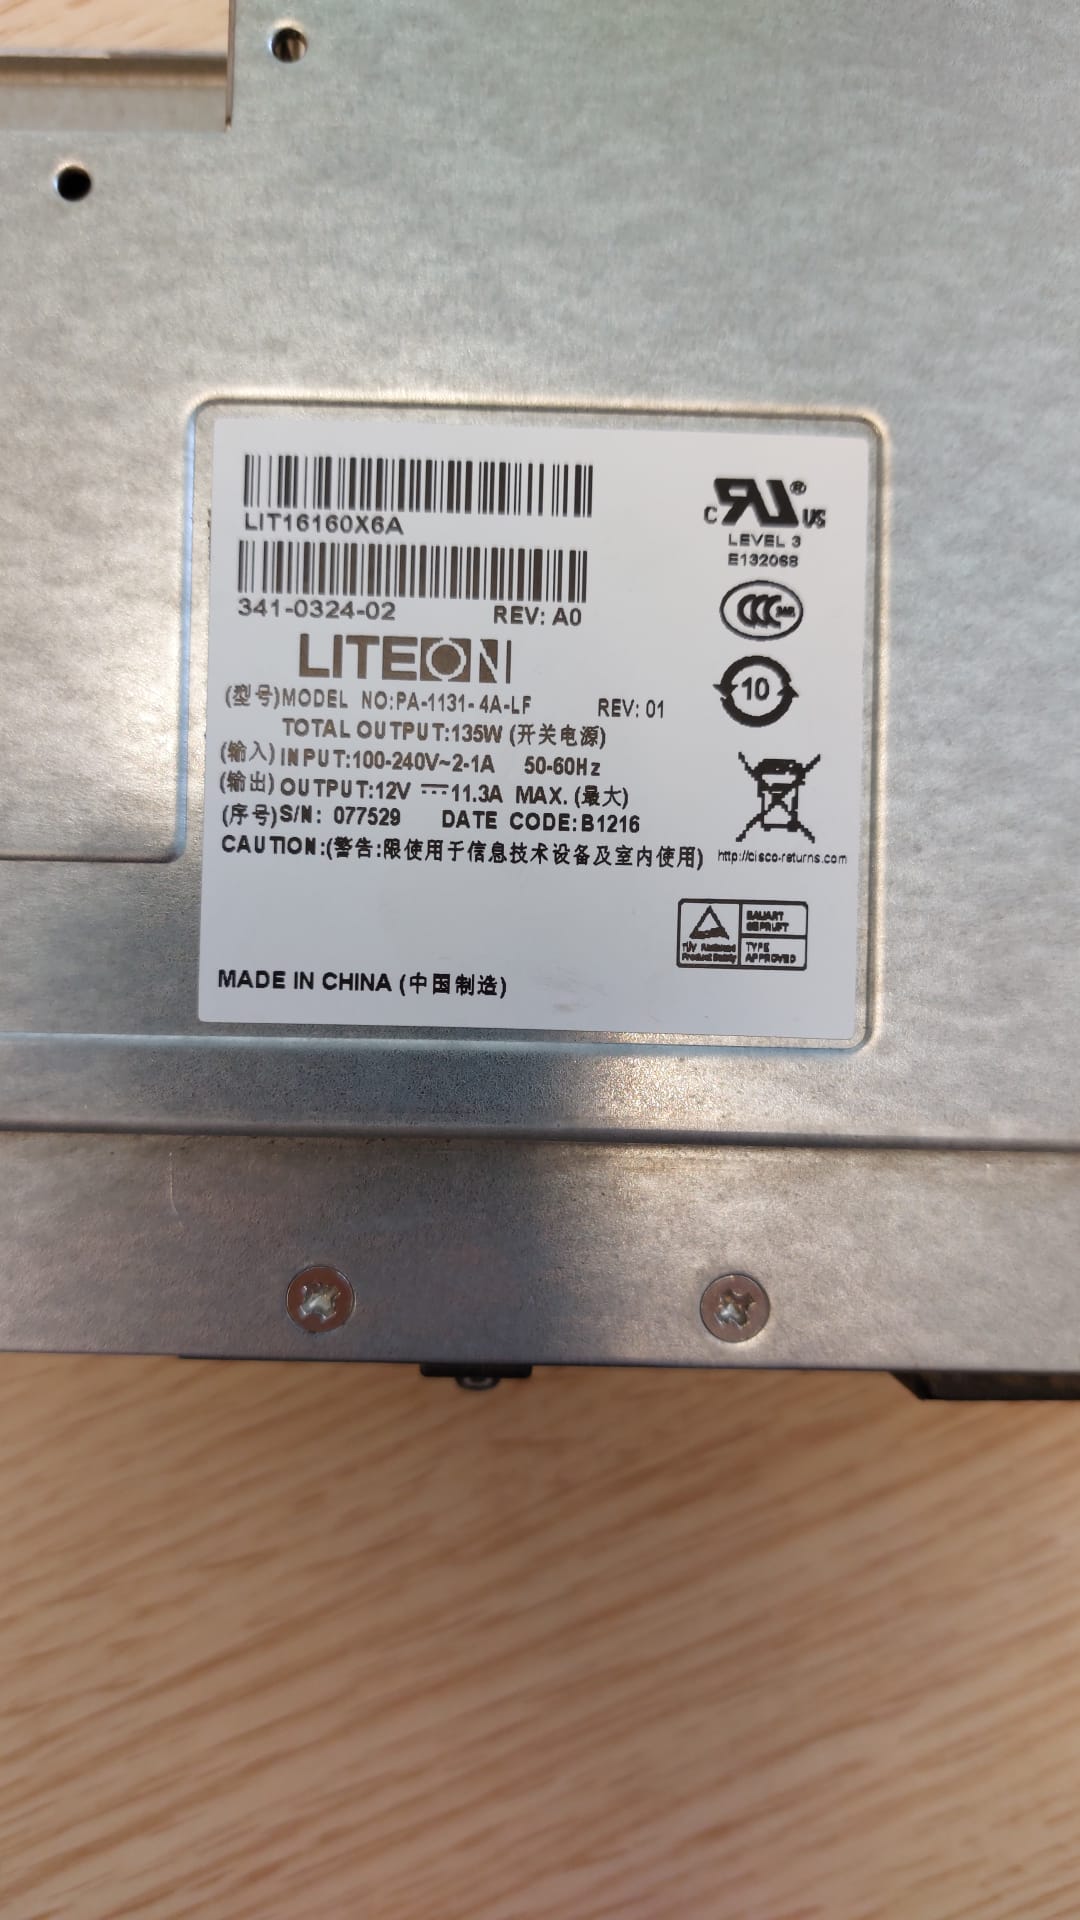 fuente de alimentación marca: Liteon modelo: PA-1131-4A-LF